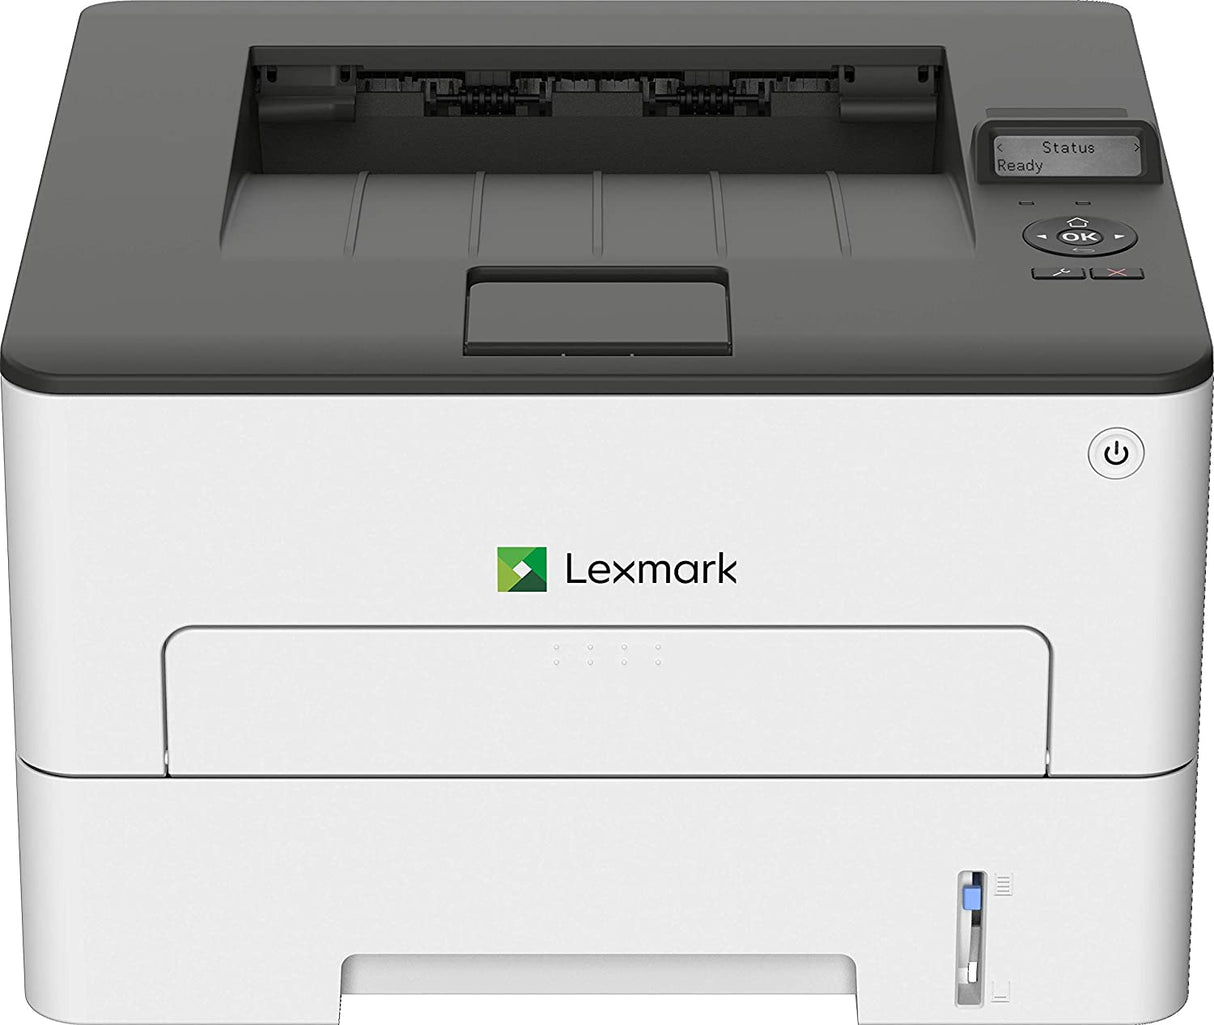 LEXMARK B2236dw Monochrome Compact Laser Printer, Duplex Printing, White/Gray, Small